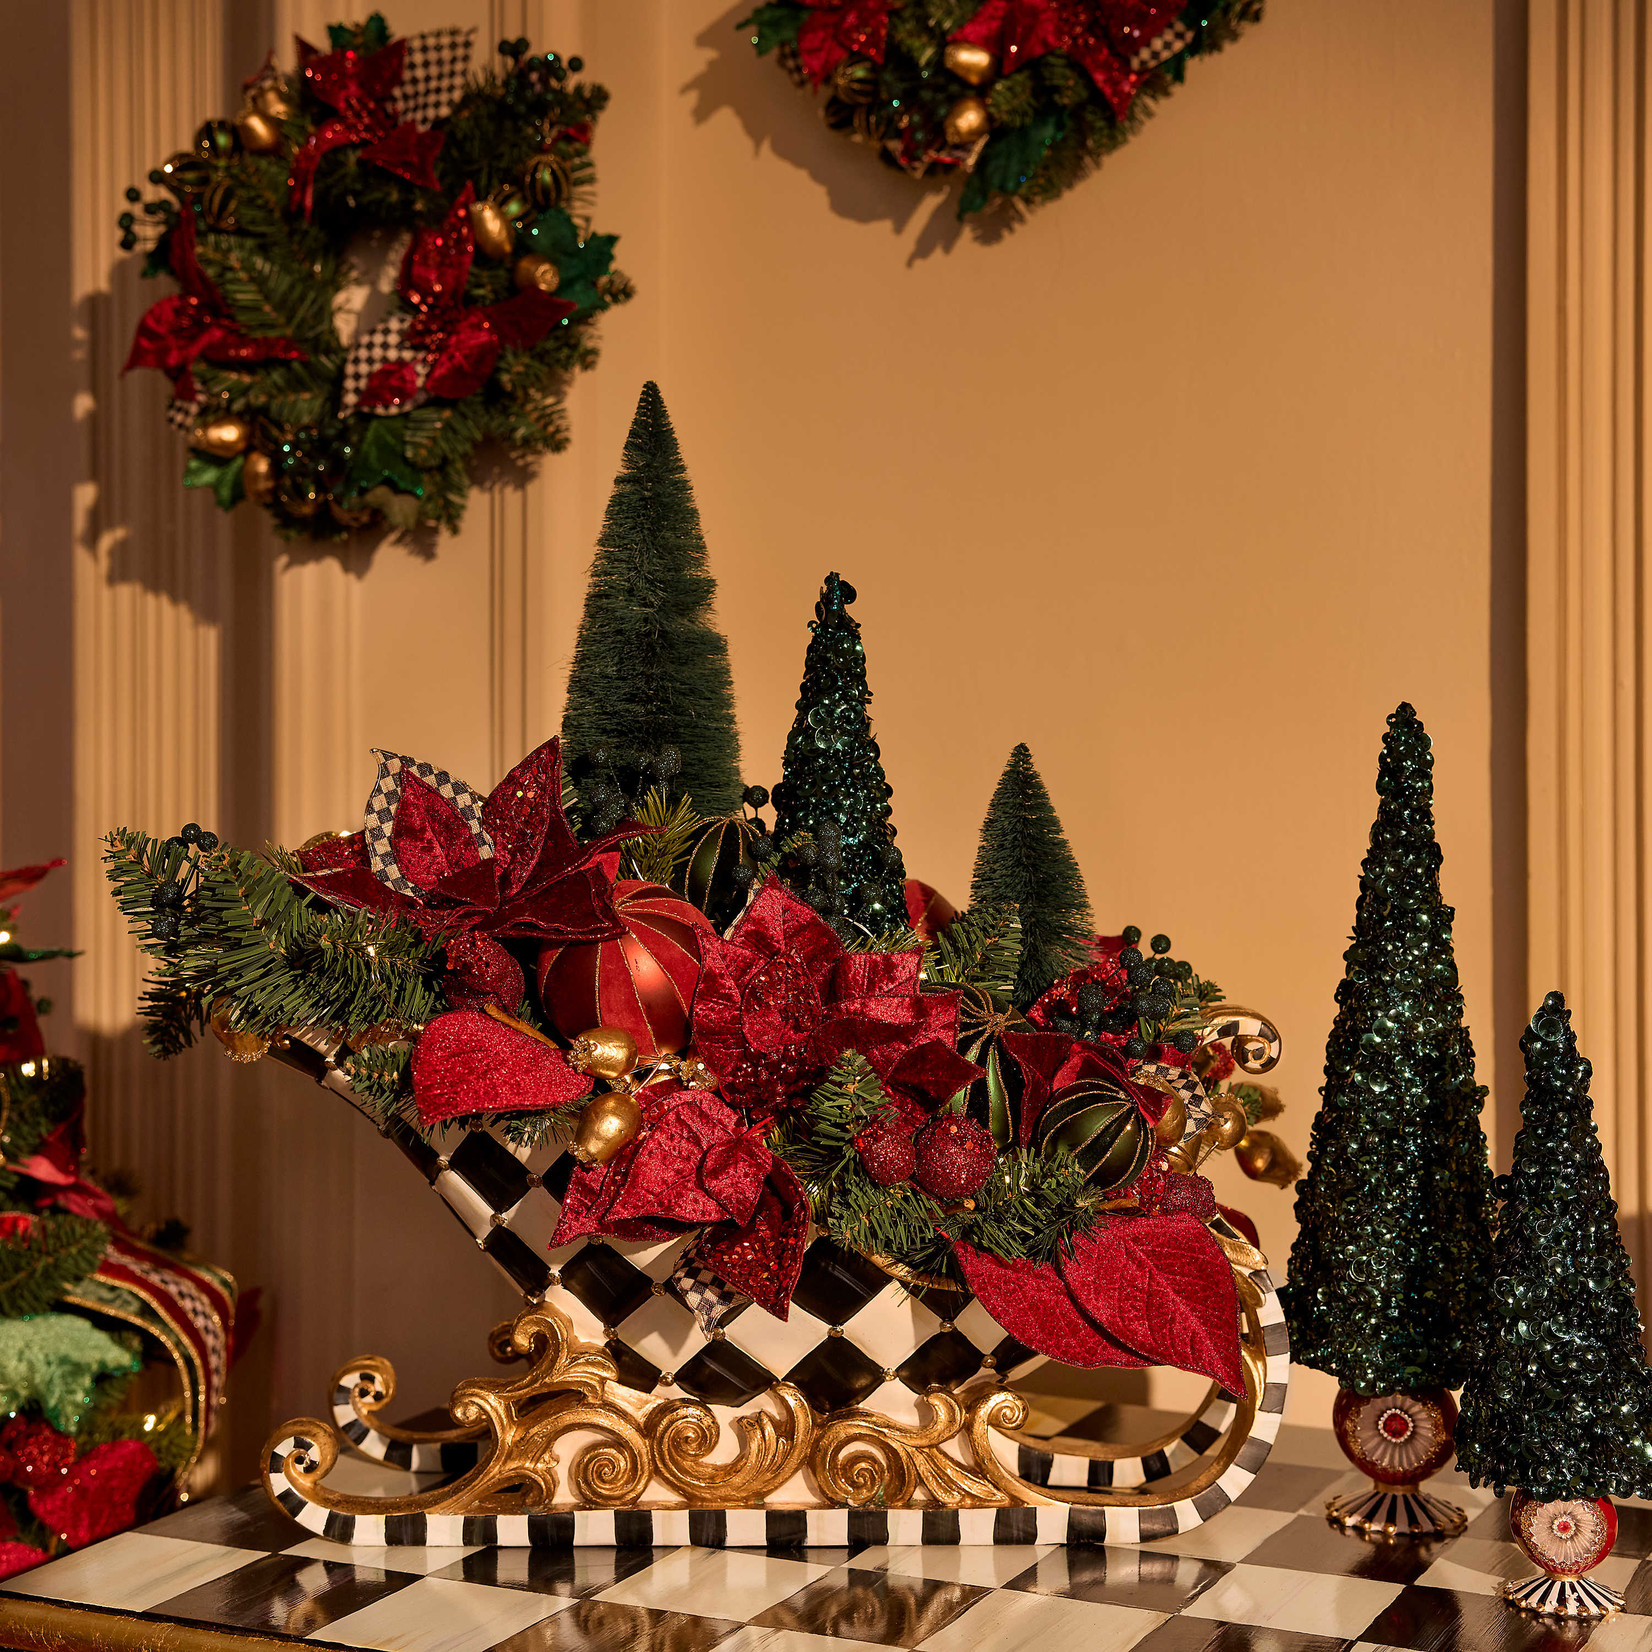 MacKenzie-Childs Christmas Magic Sequin Tree - Large